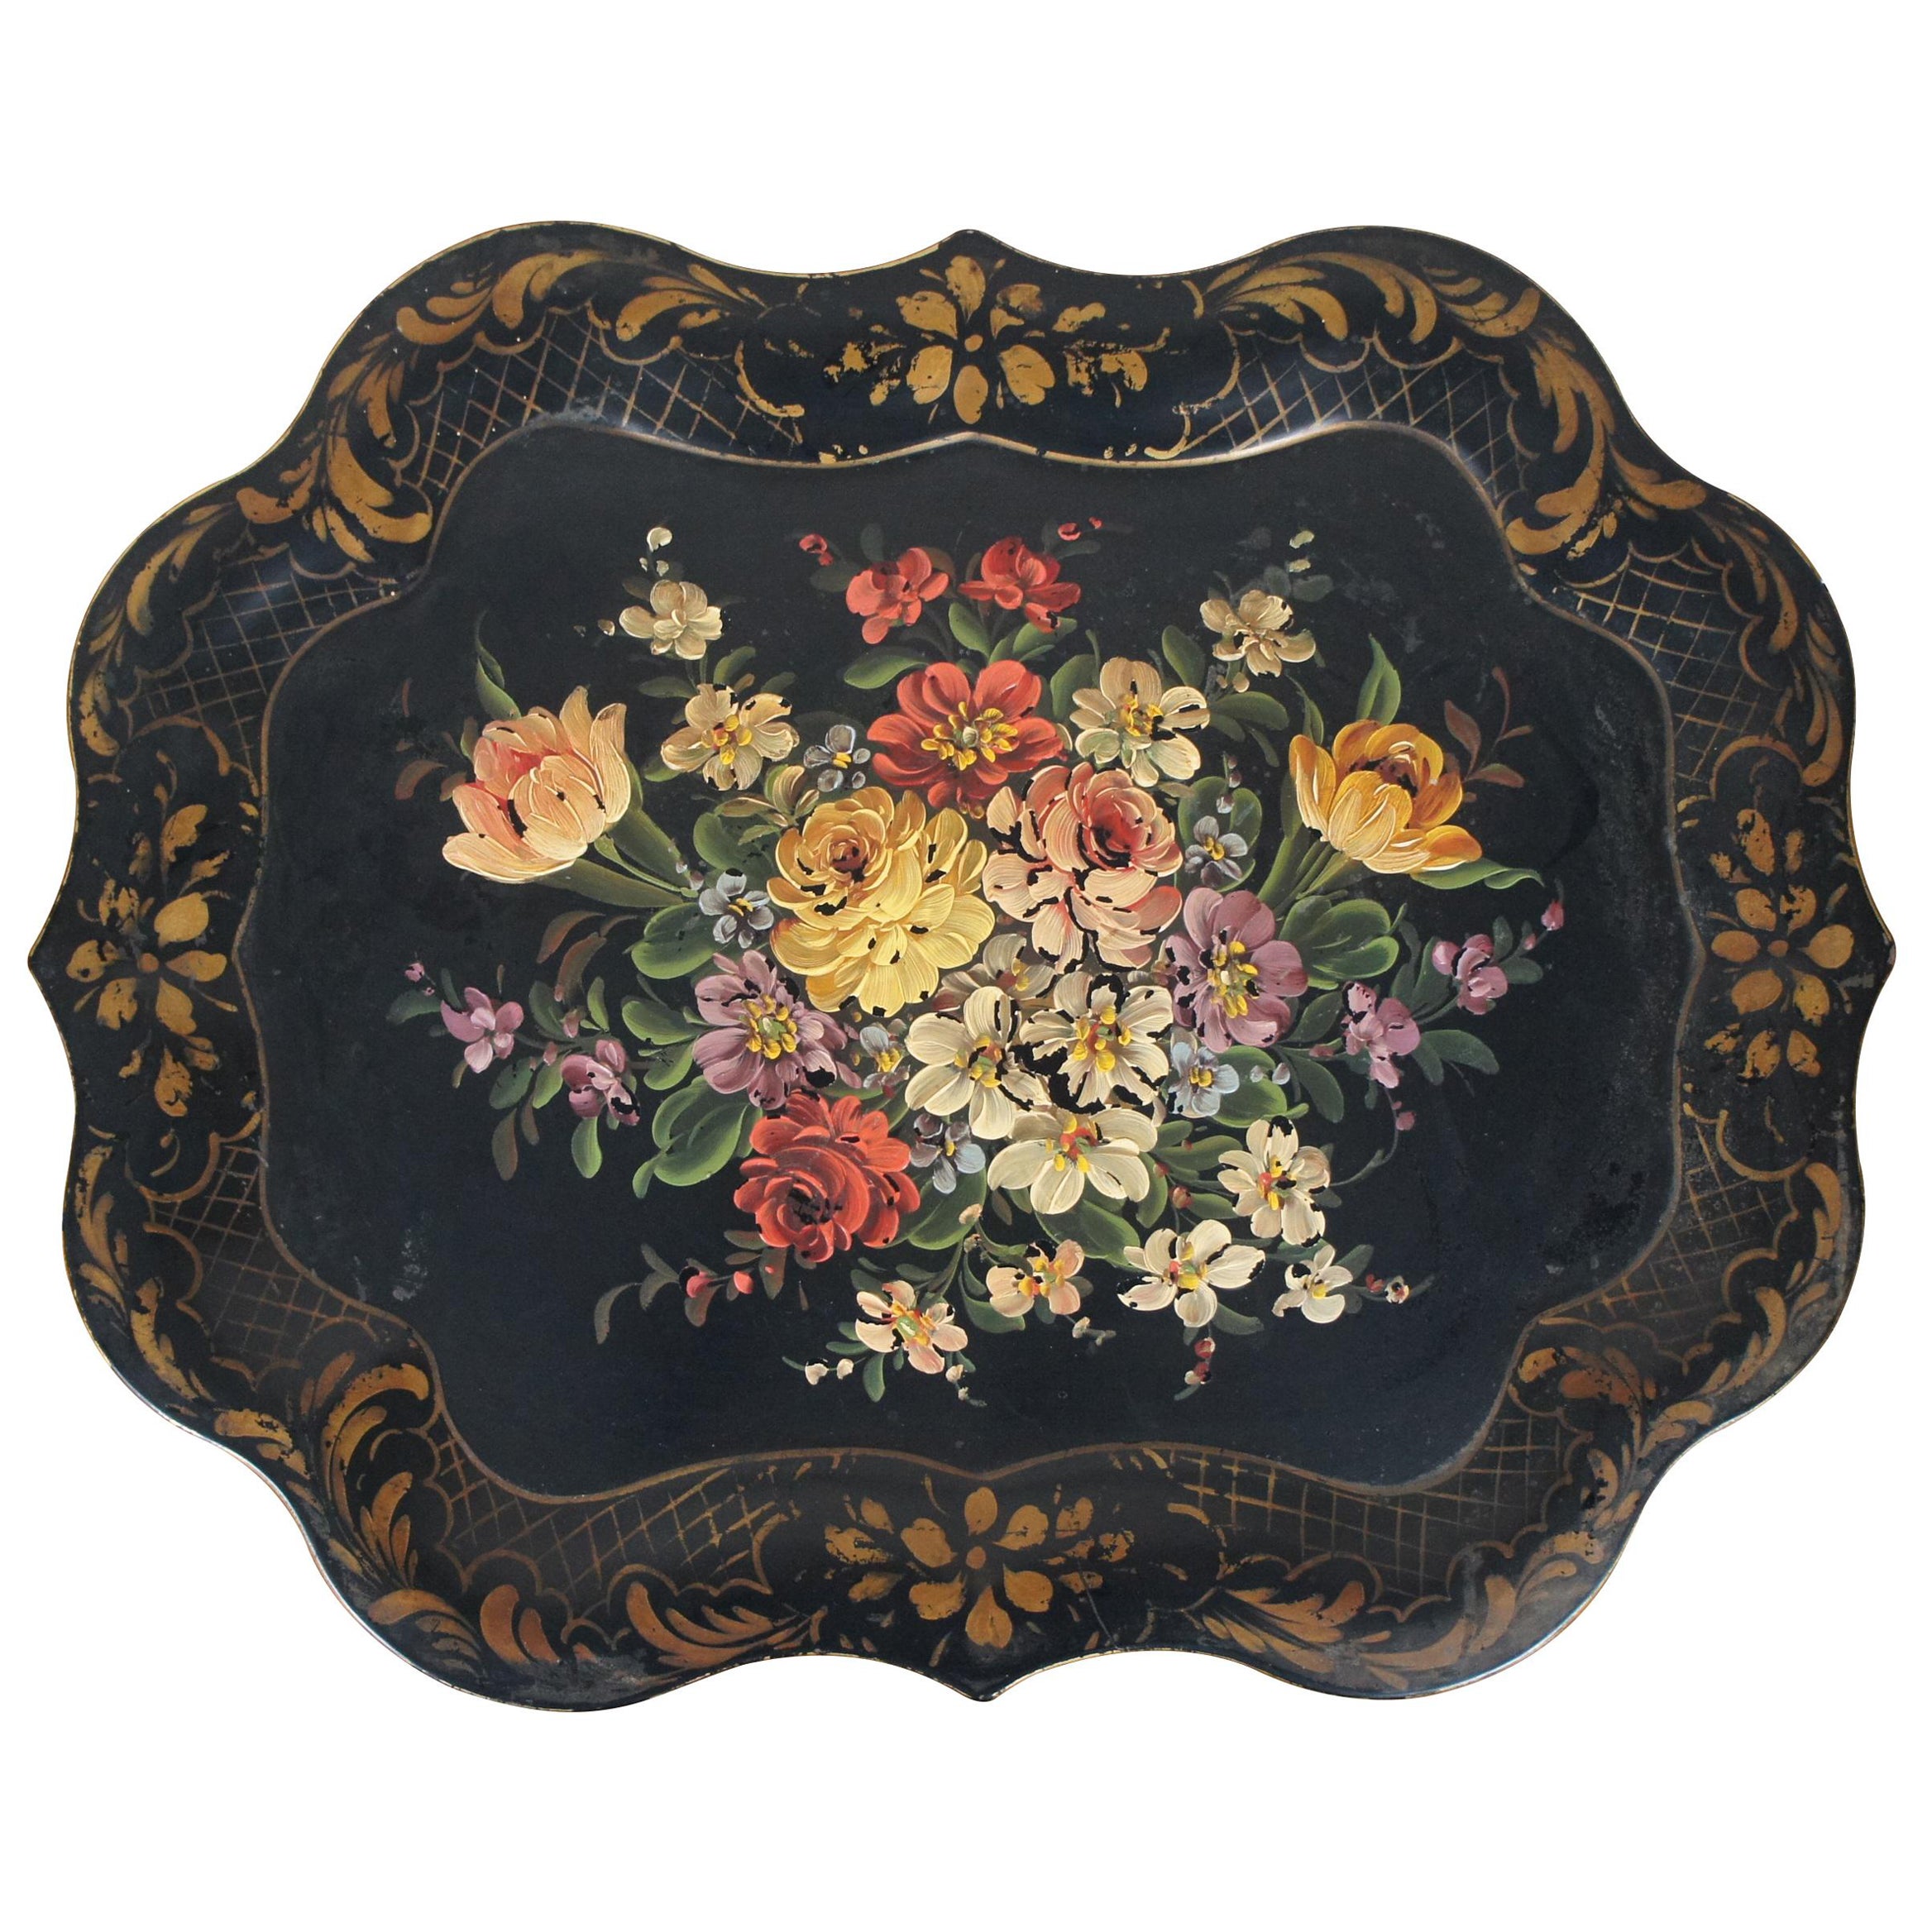 Large Antique Scalloped Floral Botanical Toleware Serving Tray Platter 25"